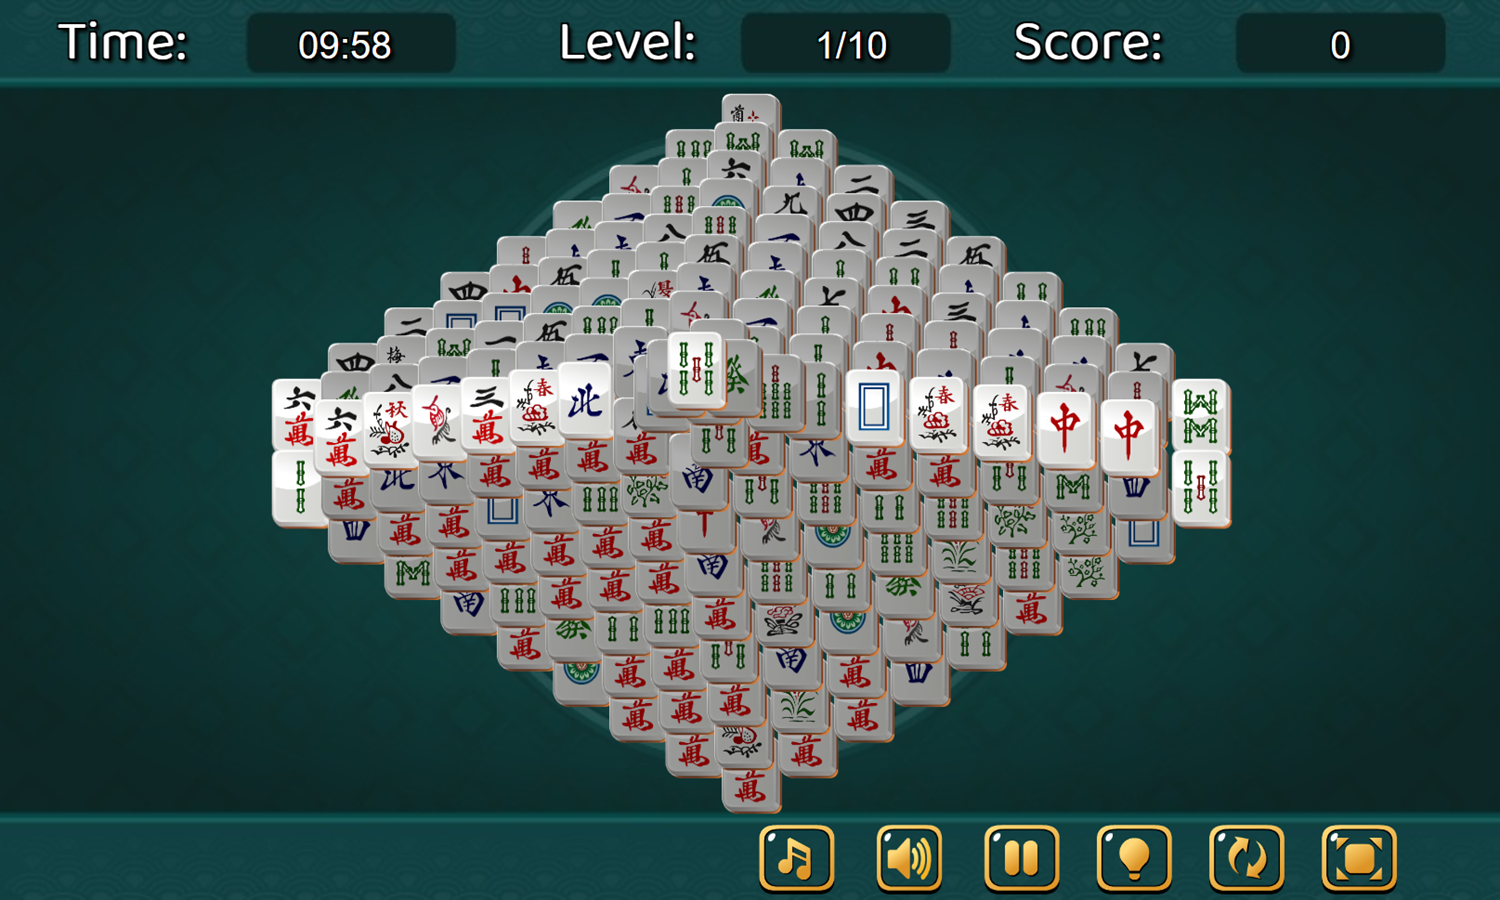 Mahjong Tower Game Level Start Screenshot.